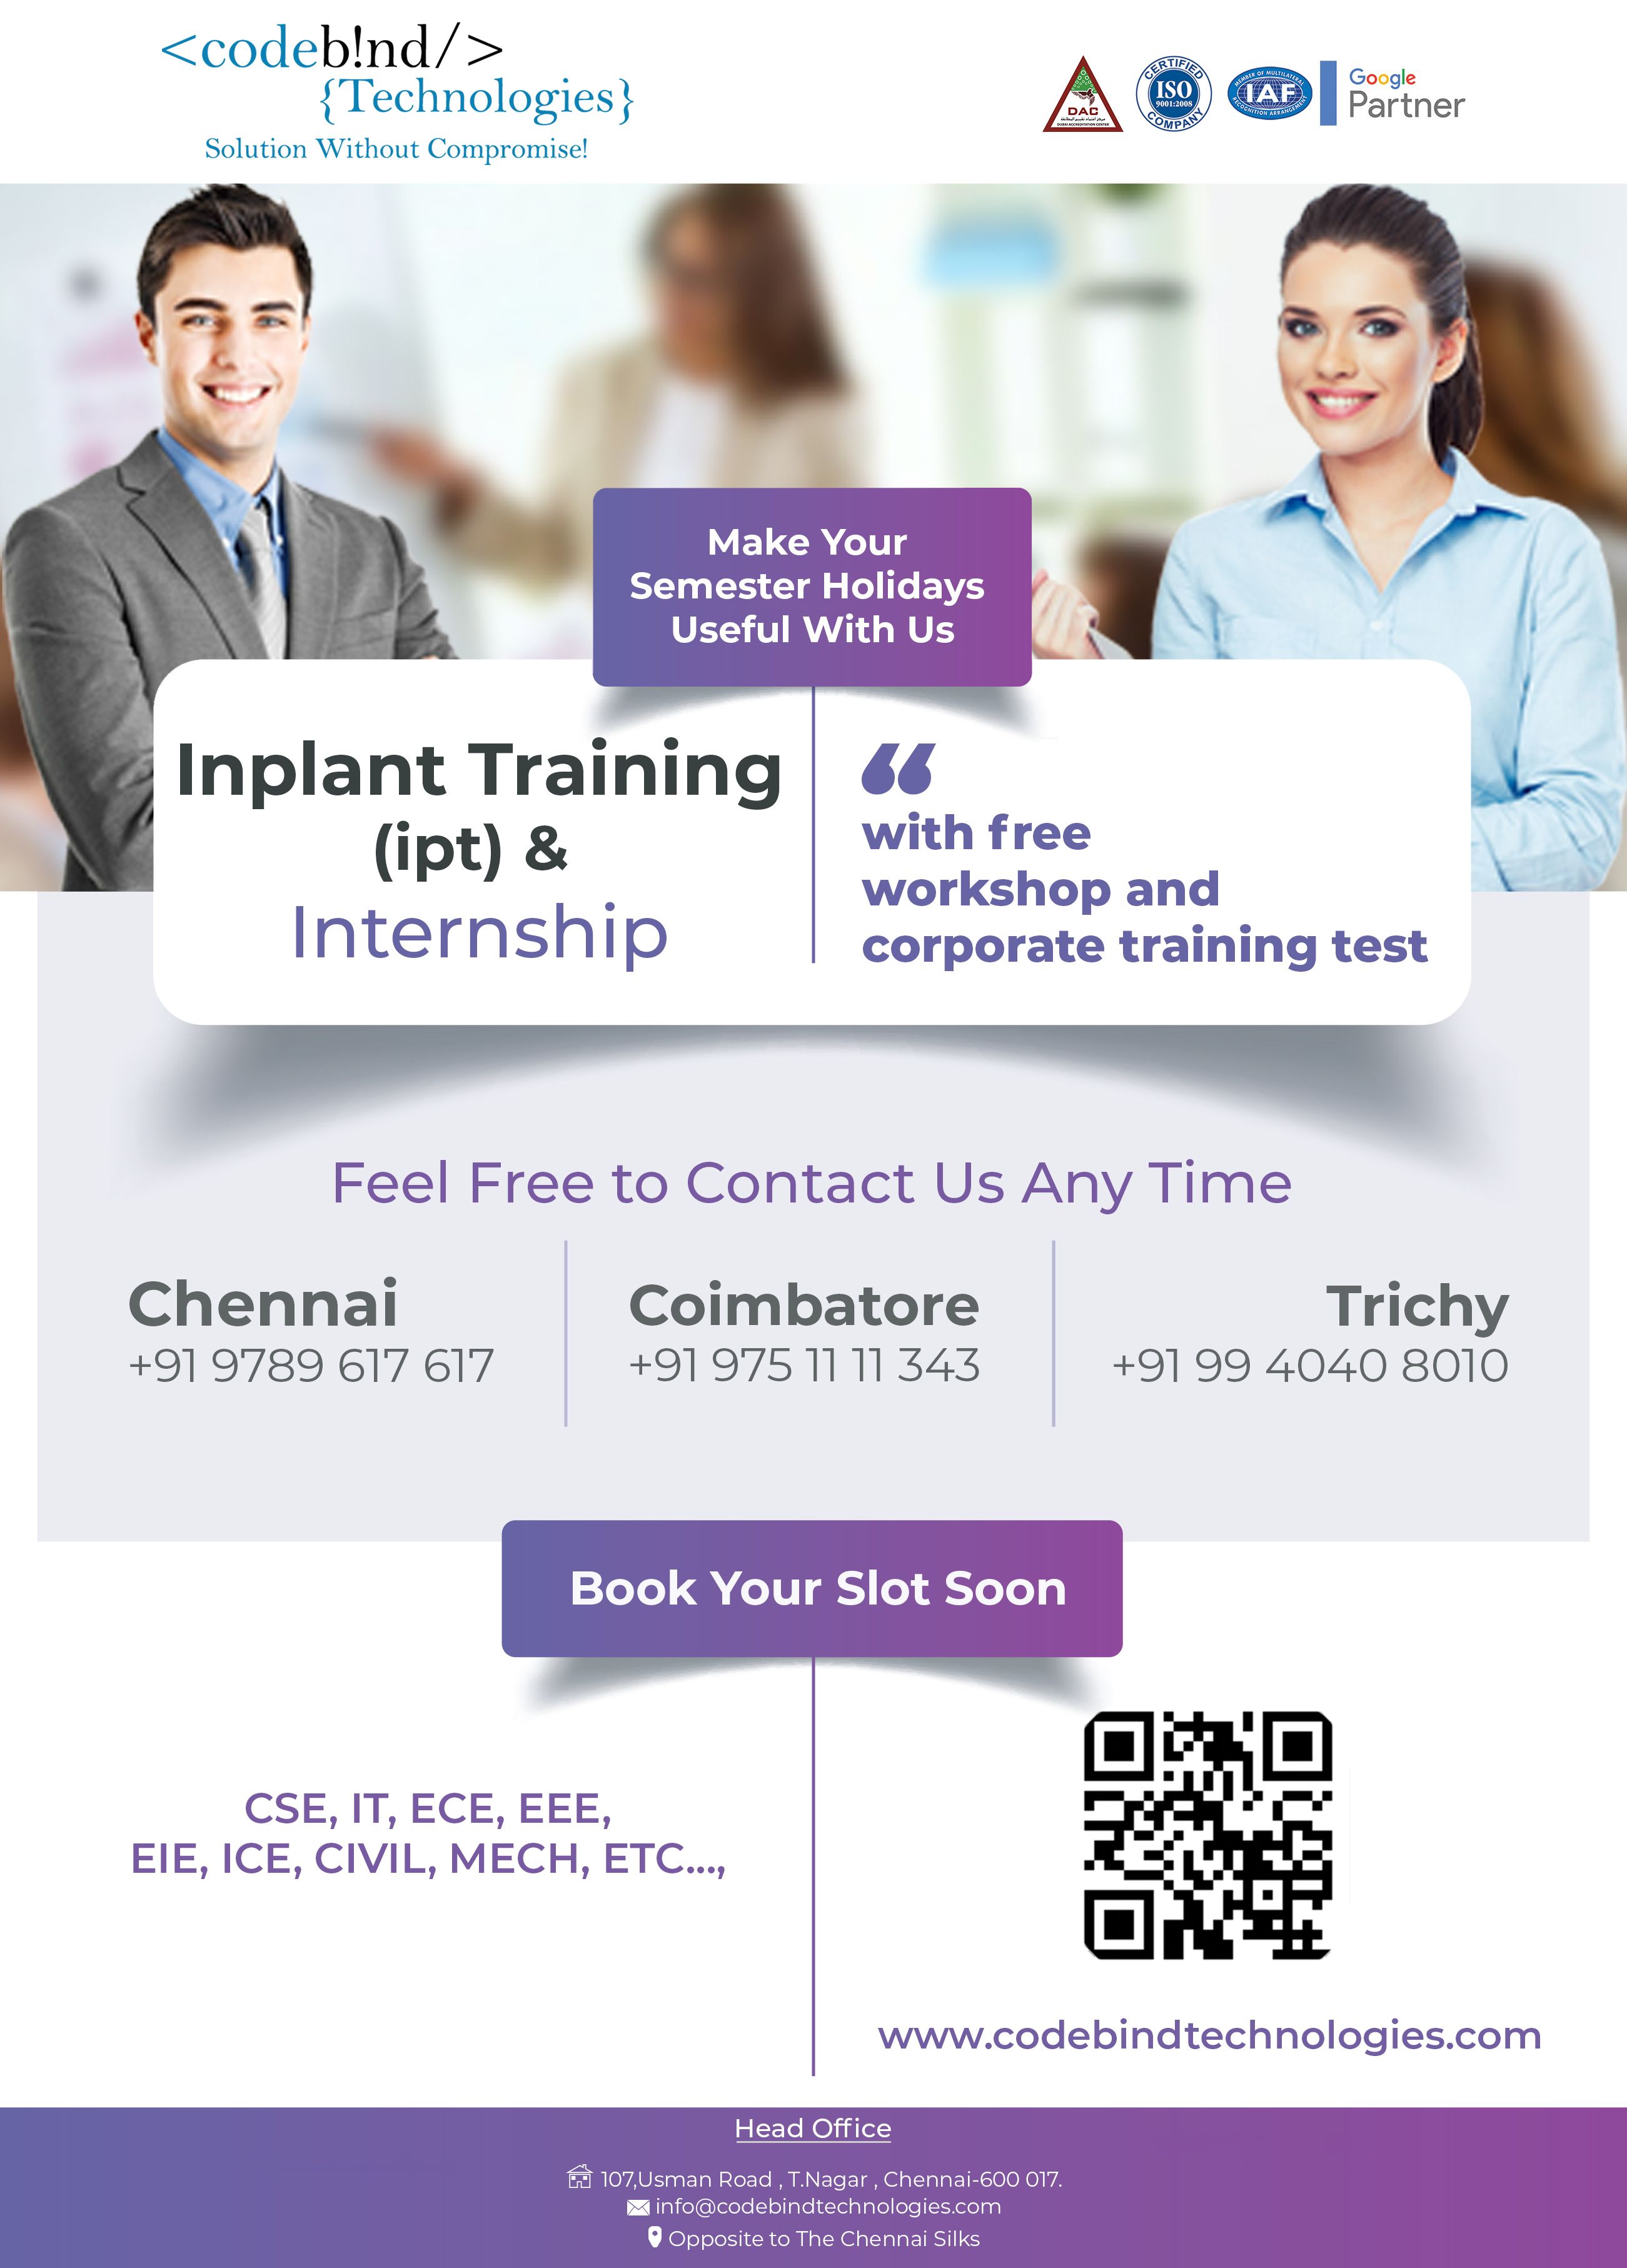 inplant training in chennai for ece